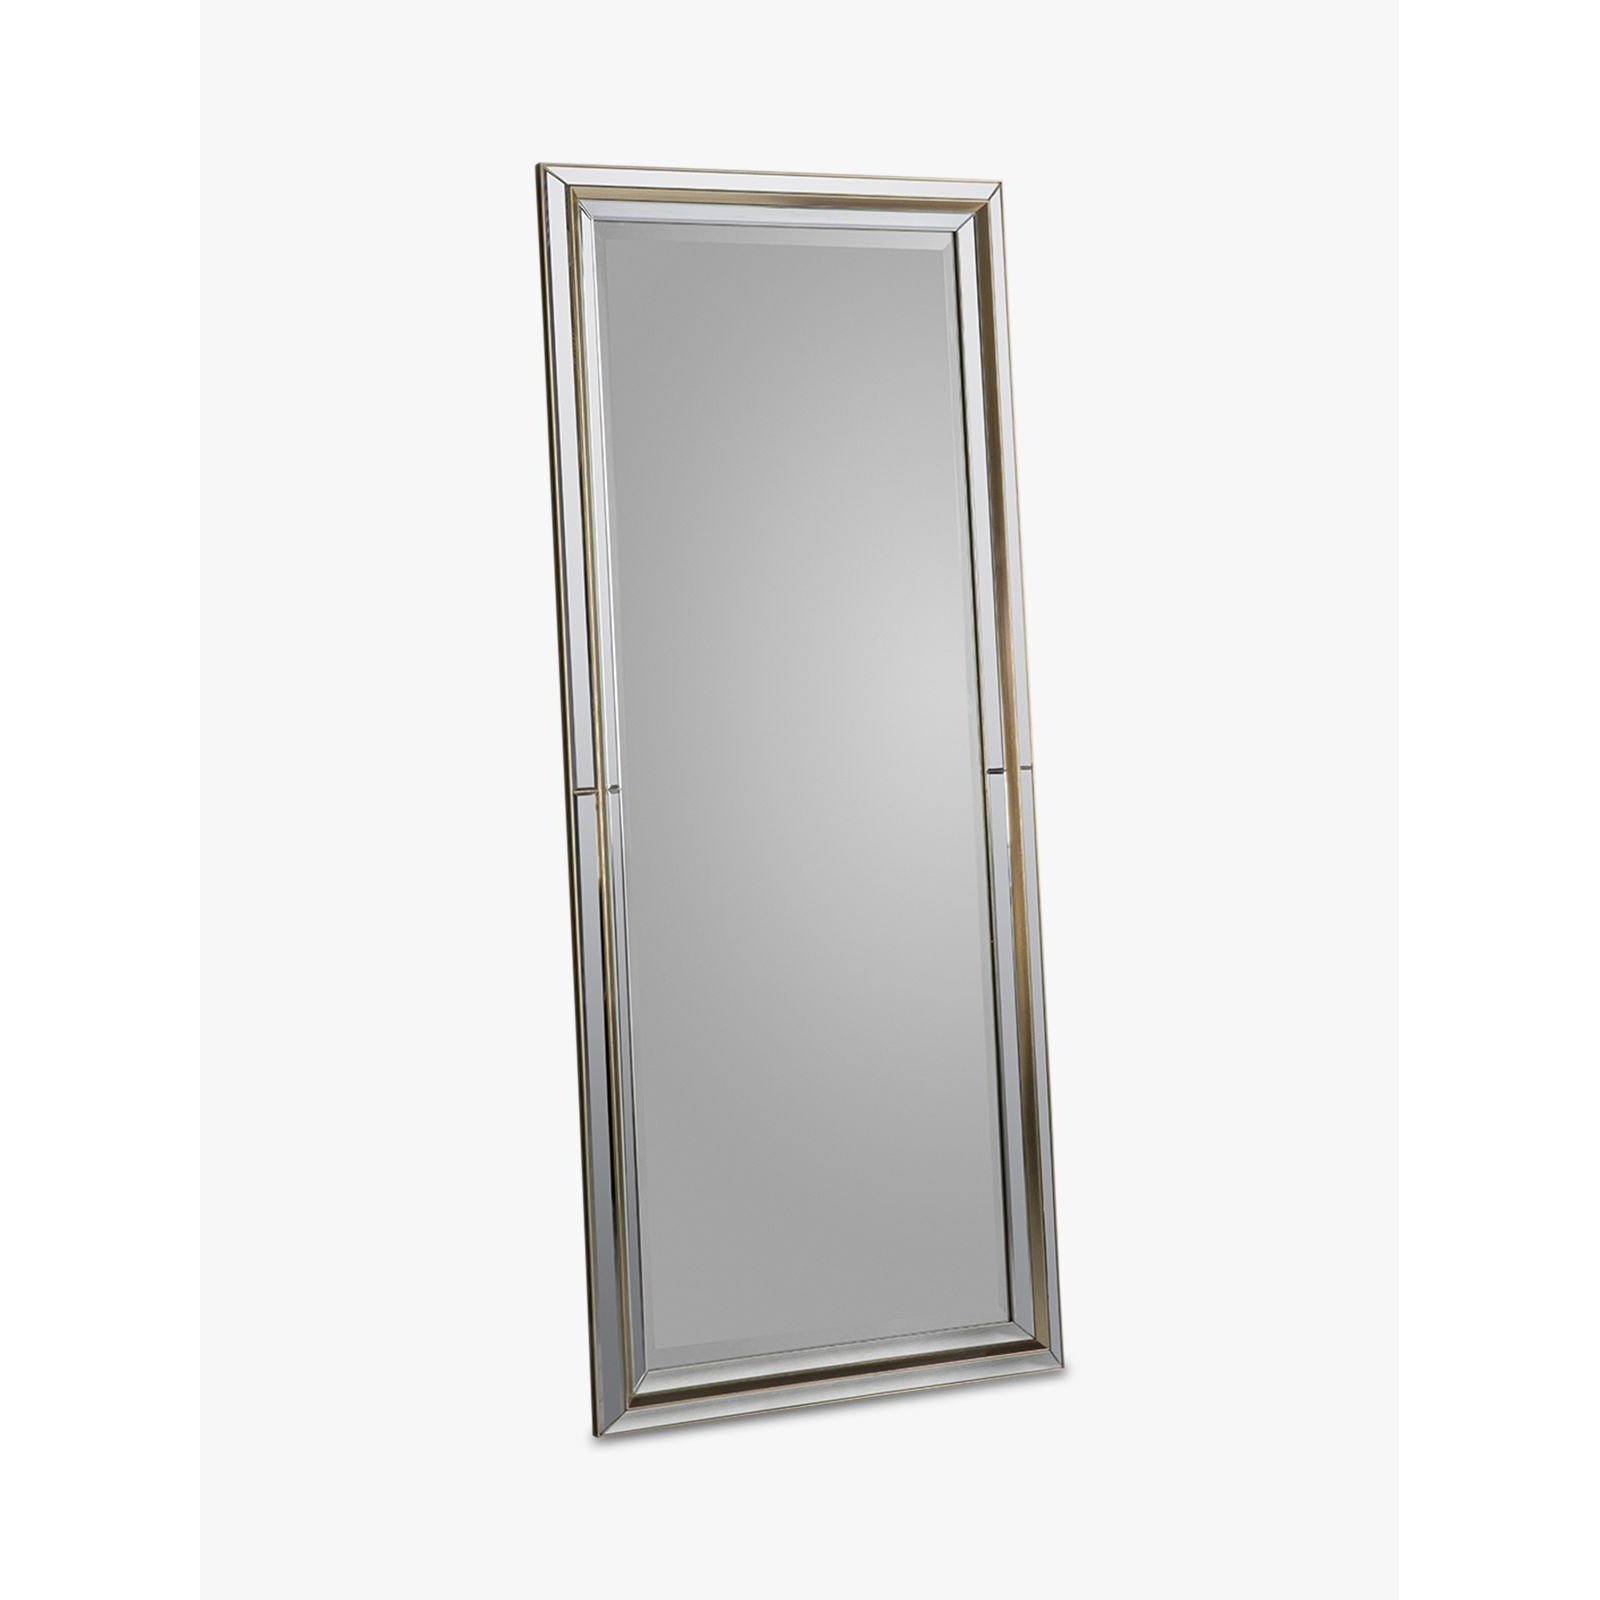 Gallery Direct Vogue Rectangular Frame Leaner Mirror, 151.5 x 62.5cm, Gold - image 1